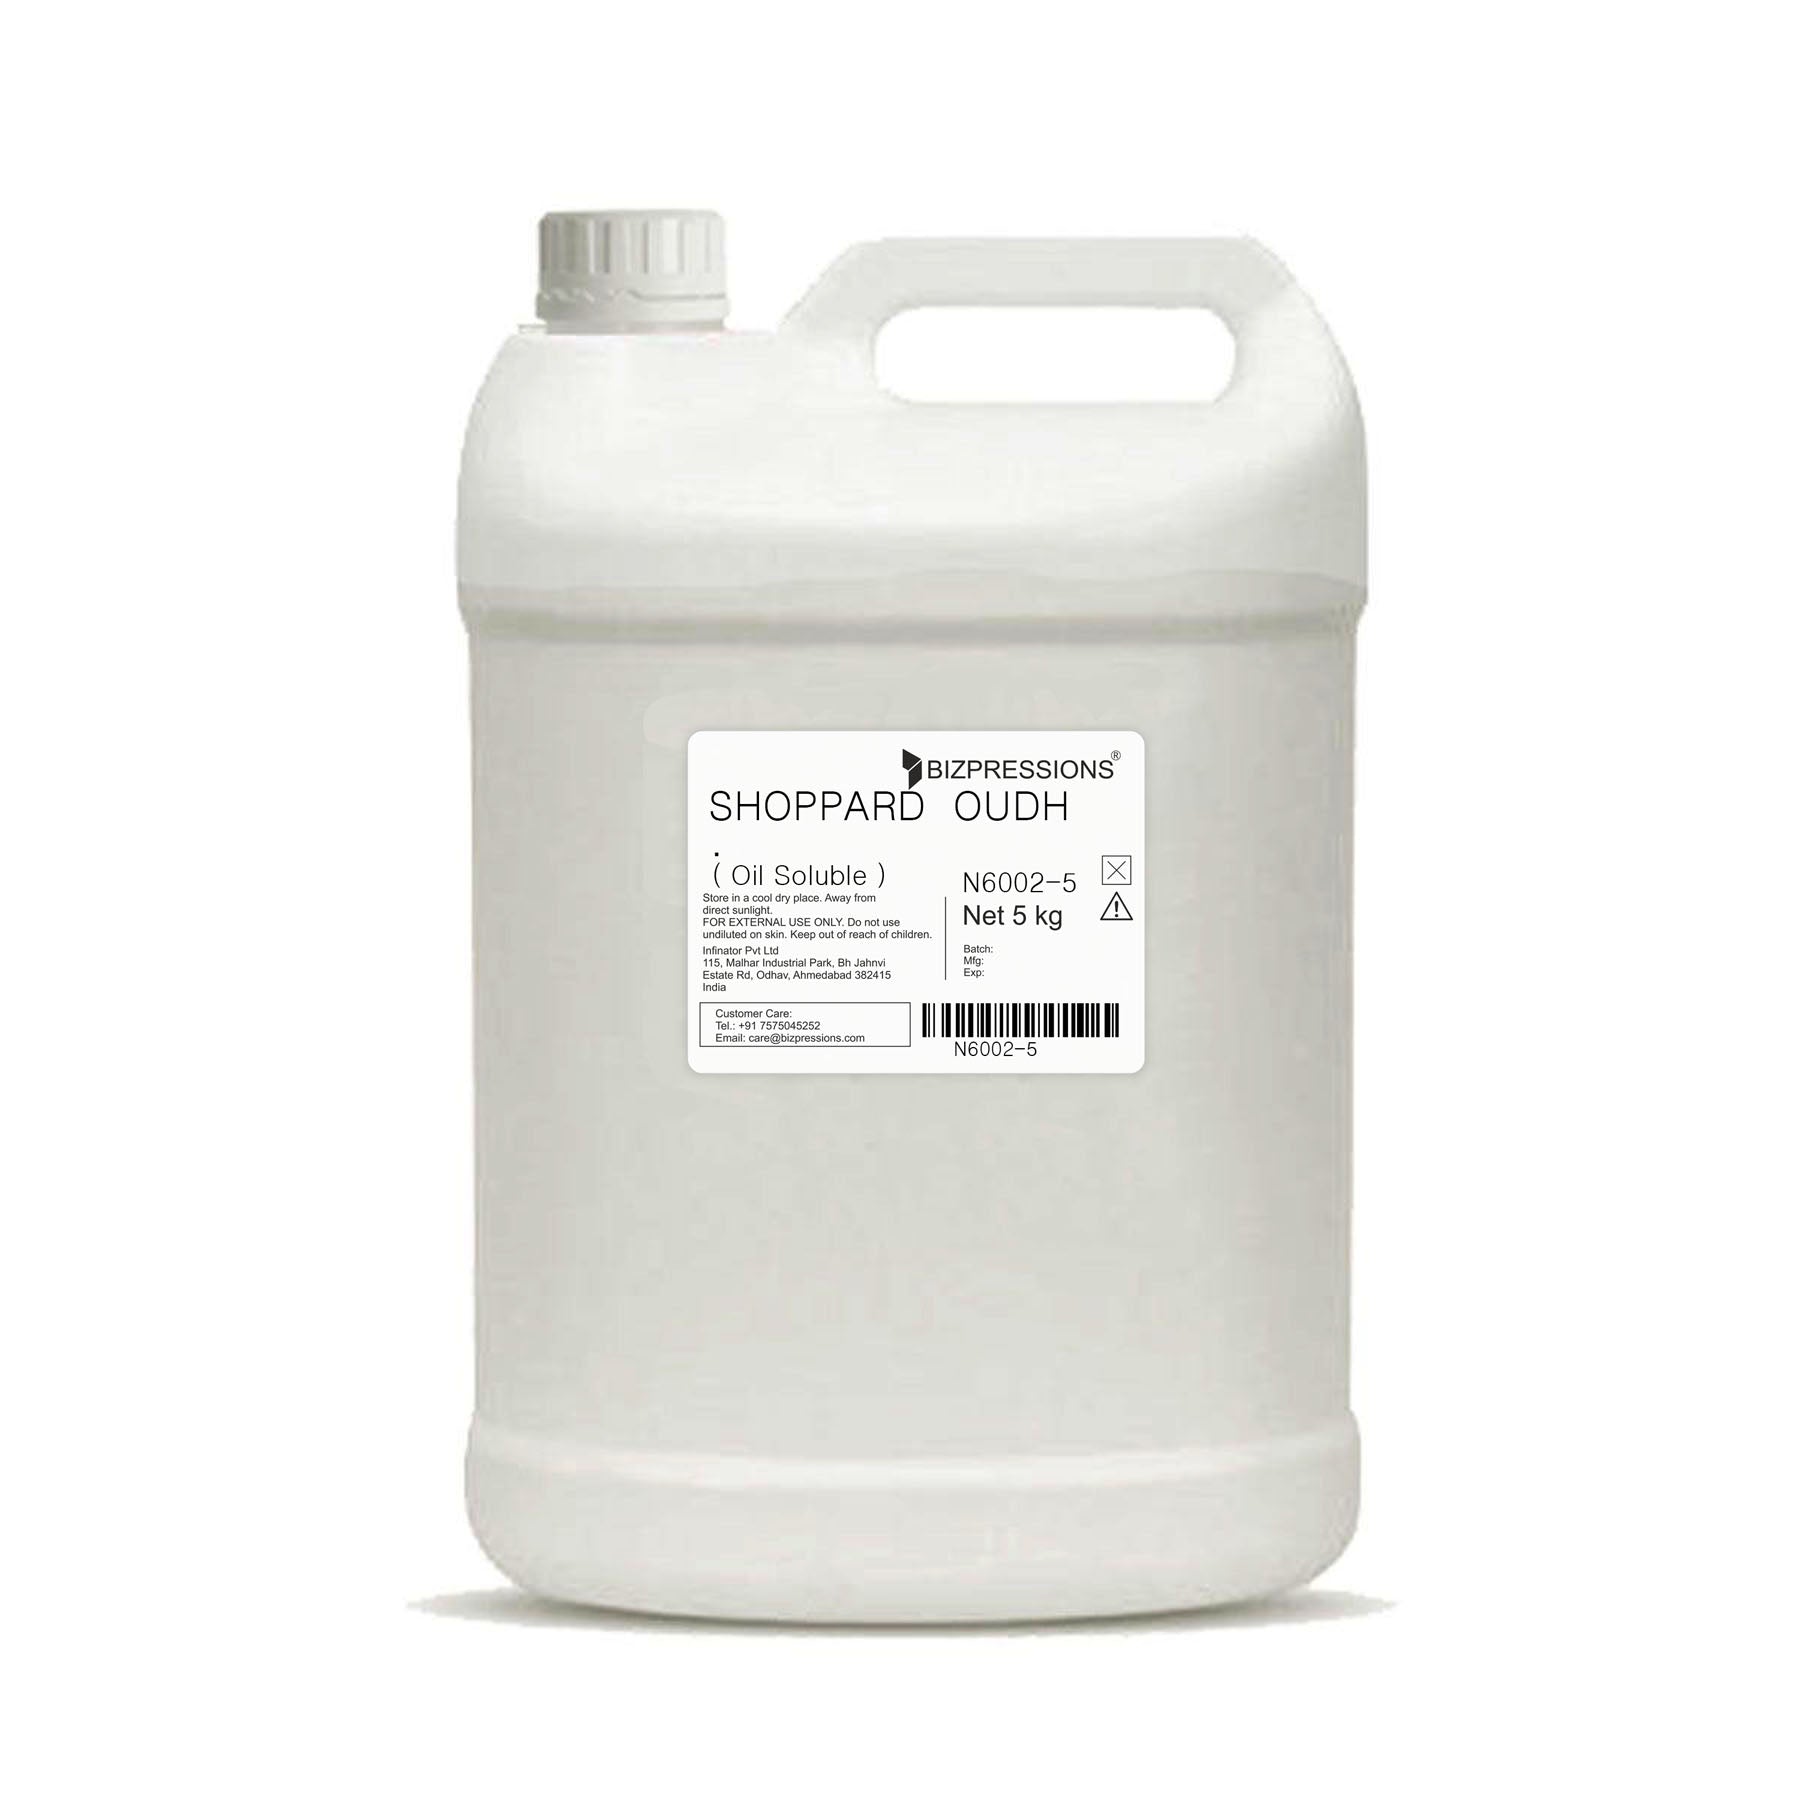 SHOPPARD OUDH - Fragrance ( Oil Soluble ) - 5 kg